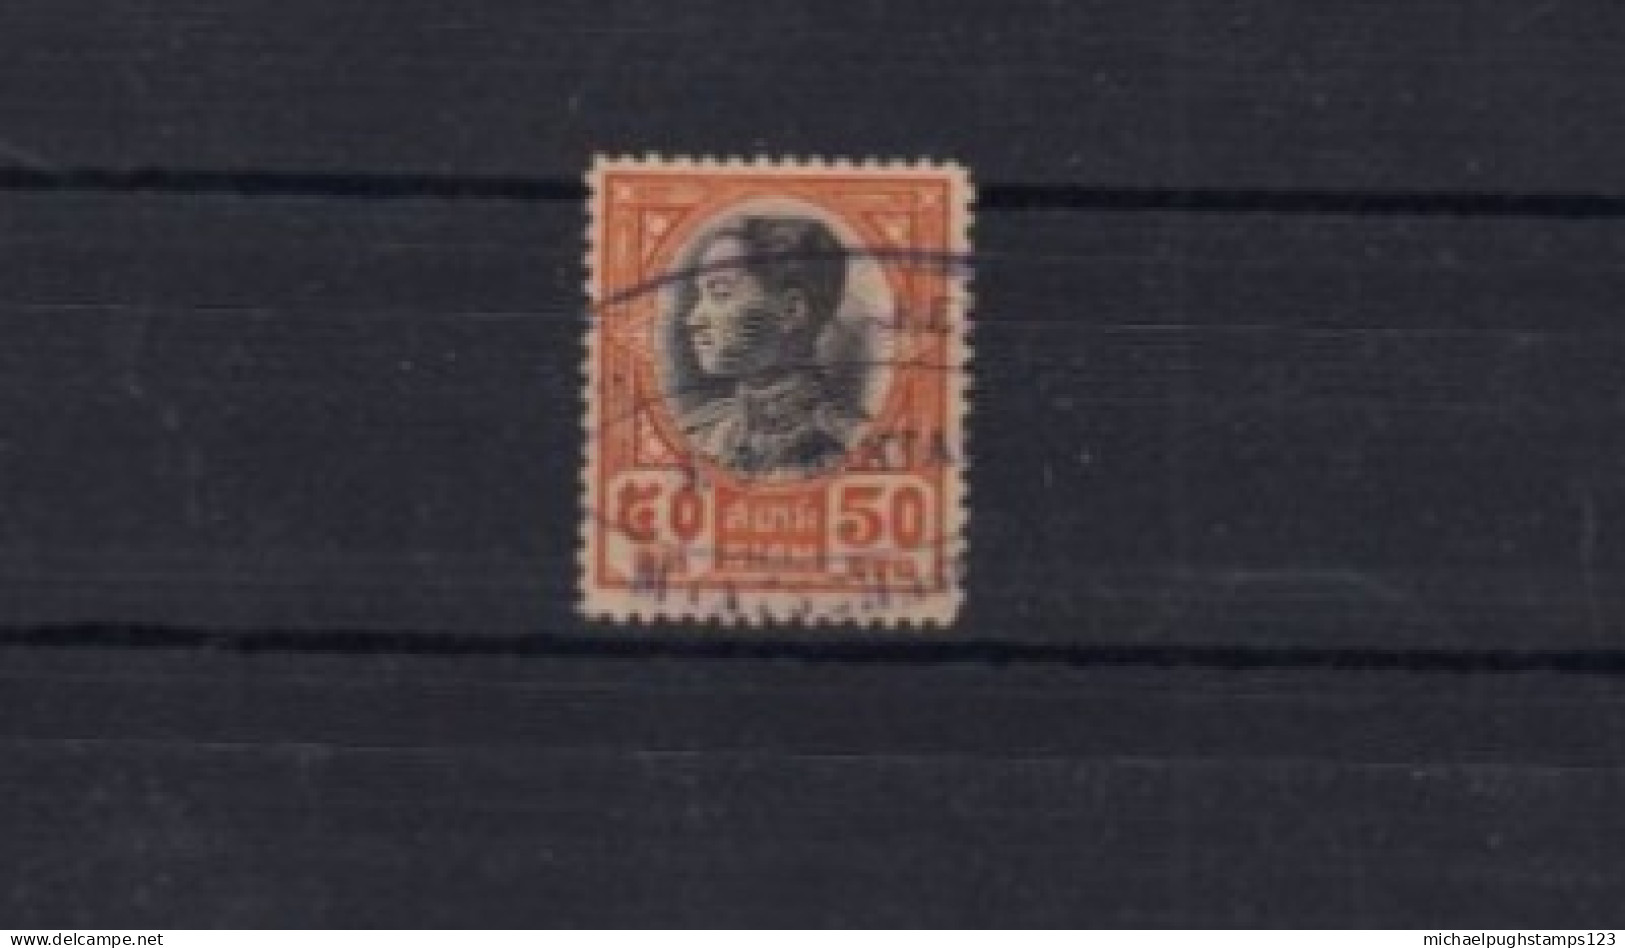 Thailand / Stamps / River Steamer Postmarks - Tailandia